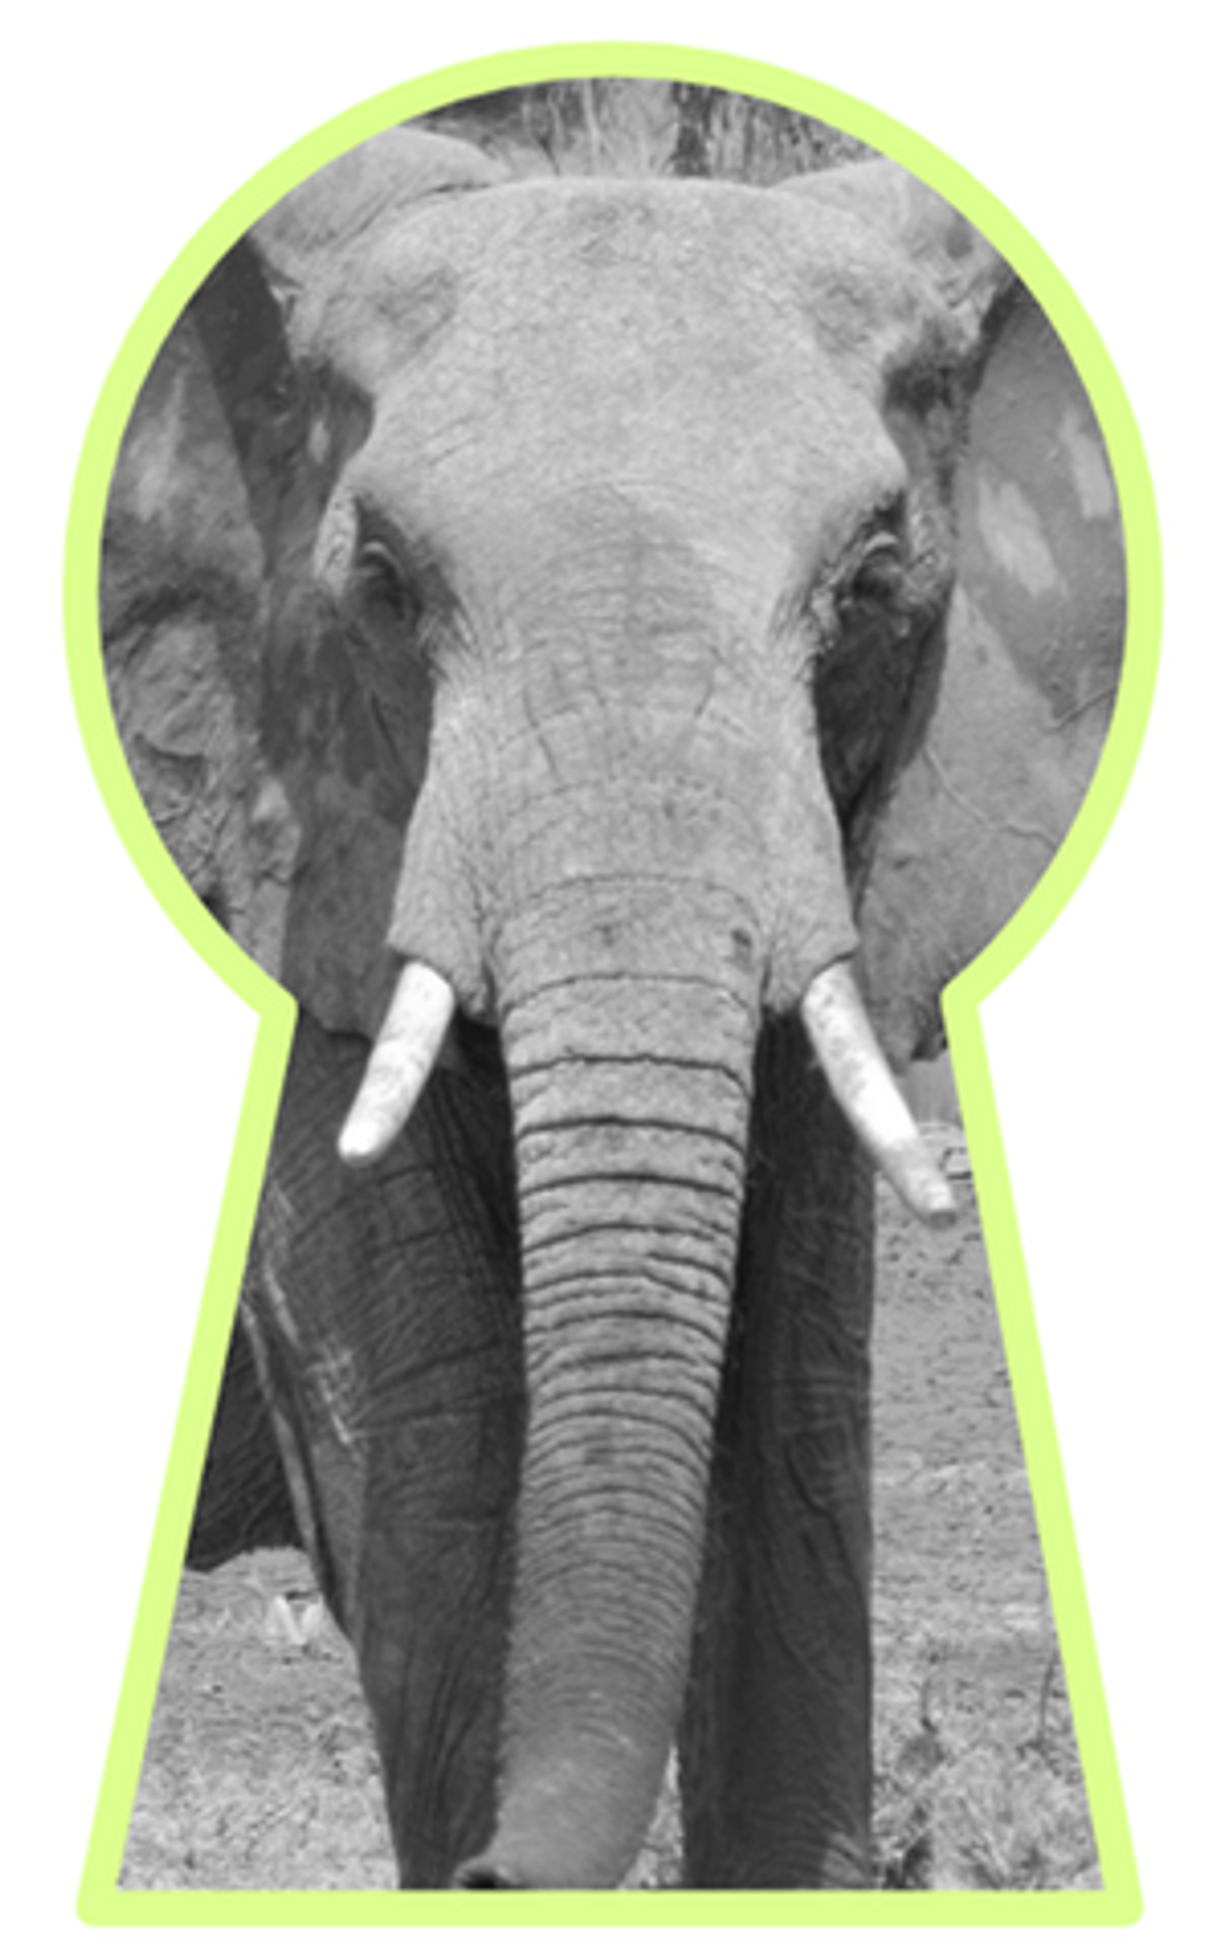 An elephant seen through a key whole